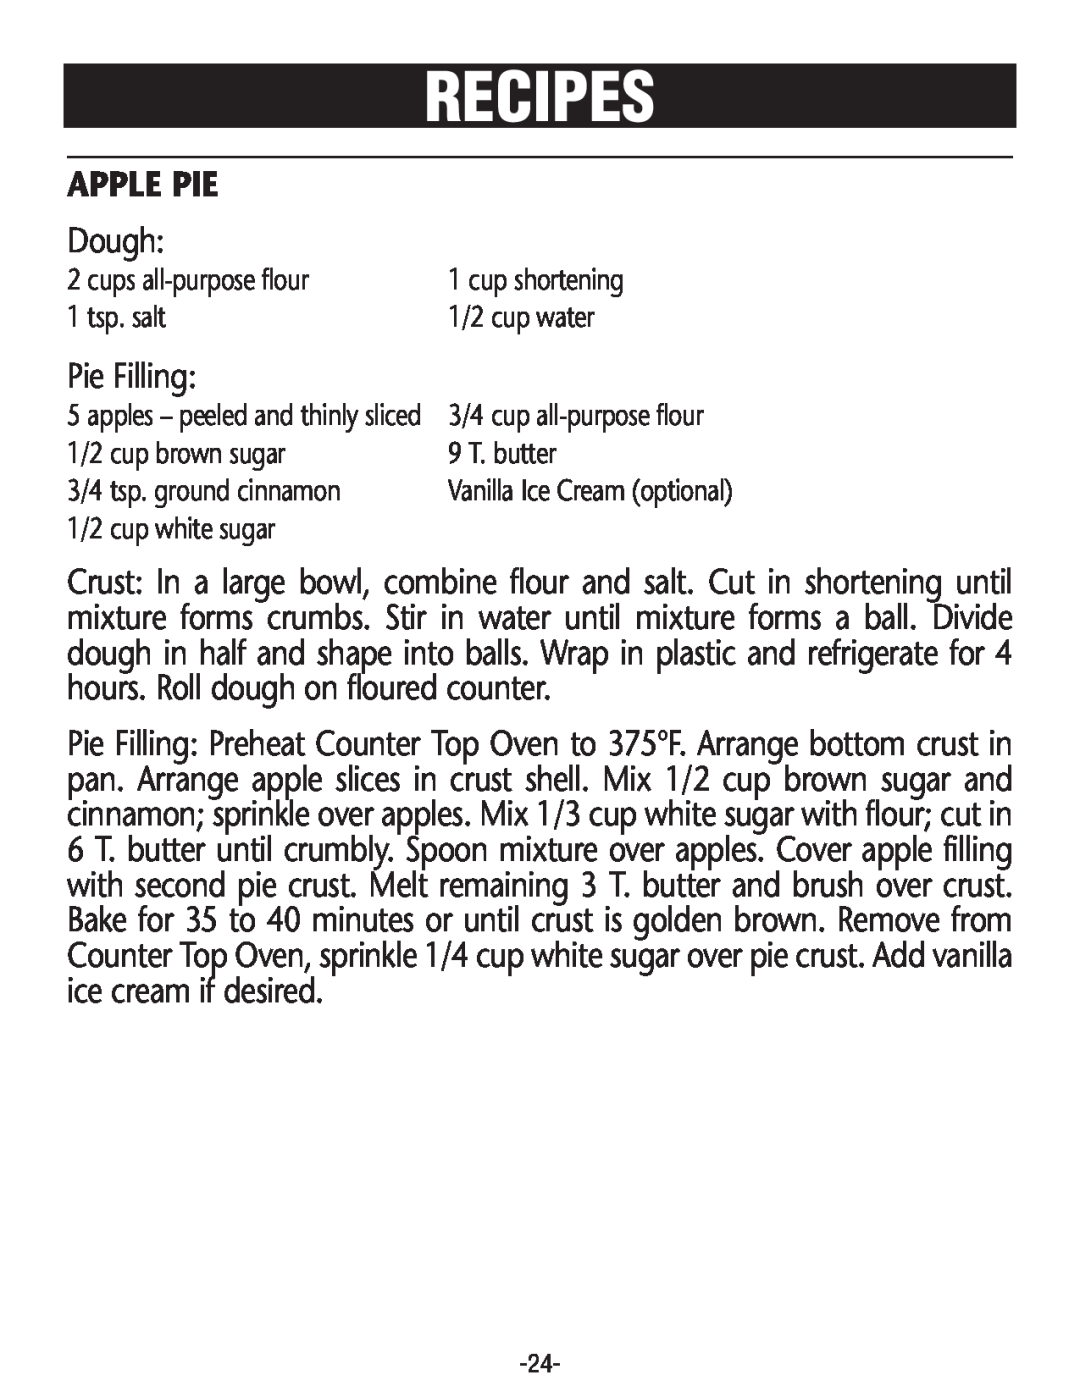 Rival CO606 manual Apple Pie, Recipes, Dough, Pie Filling 